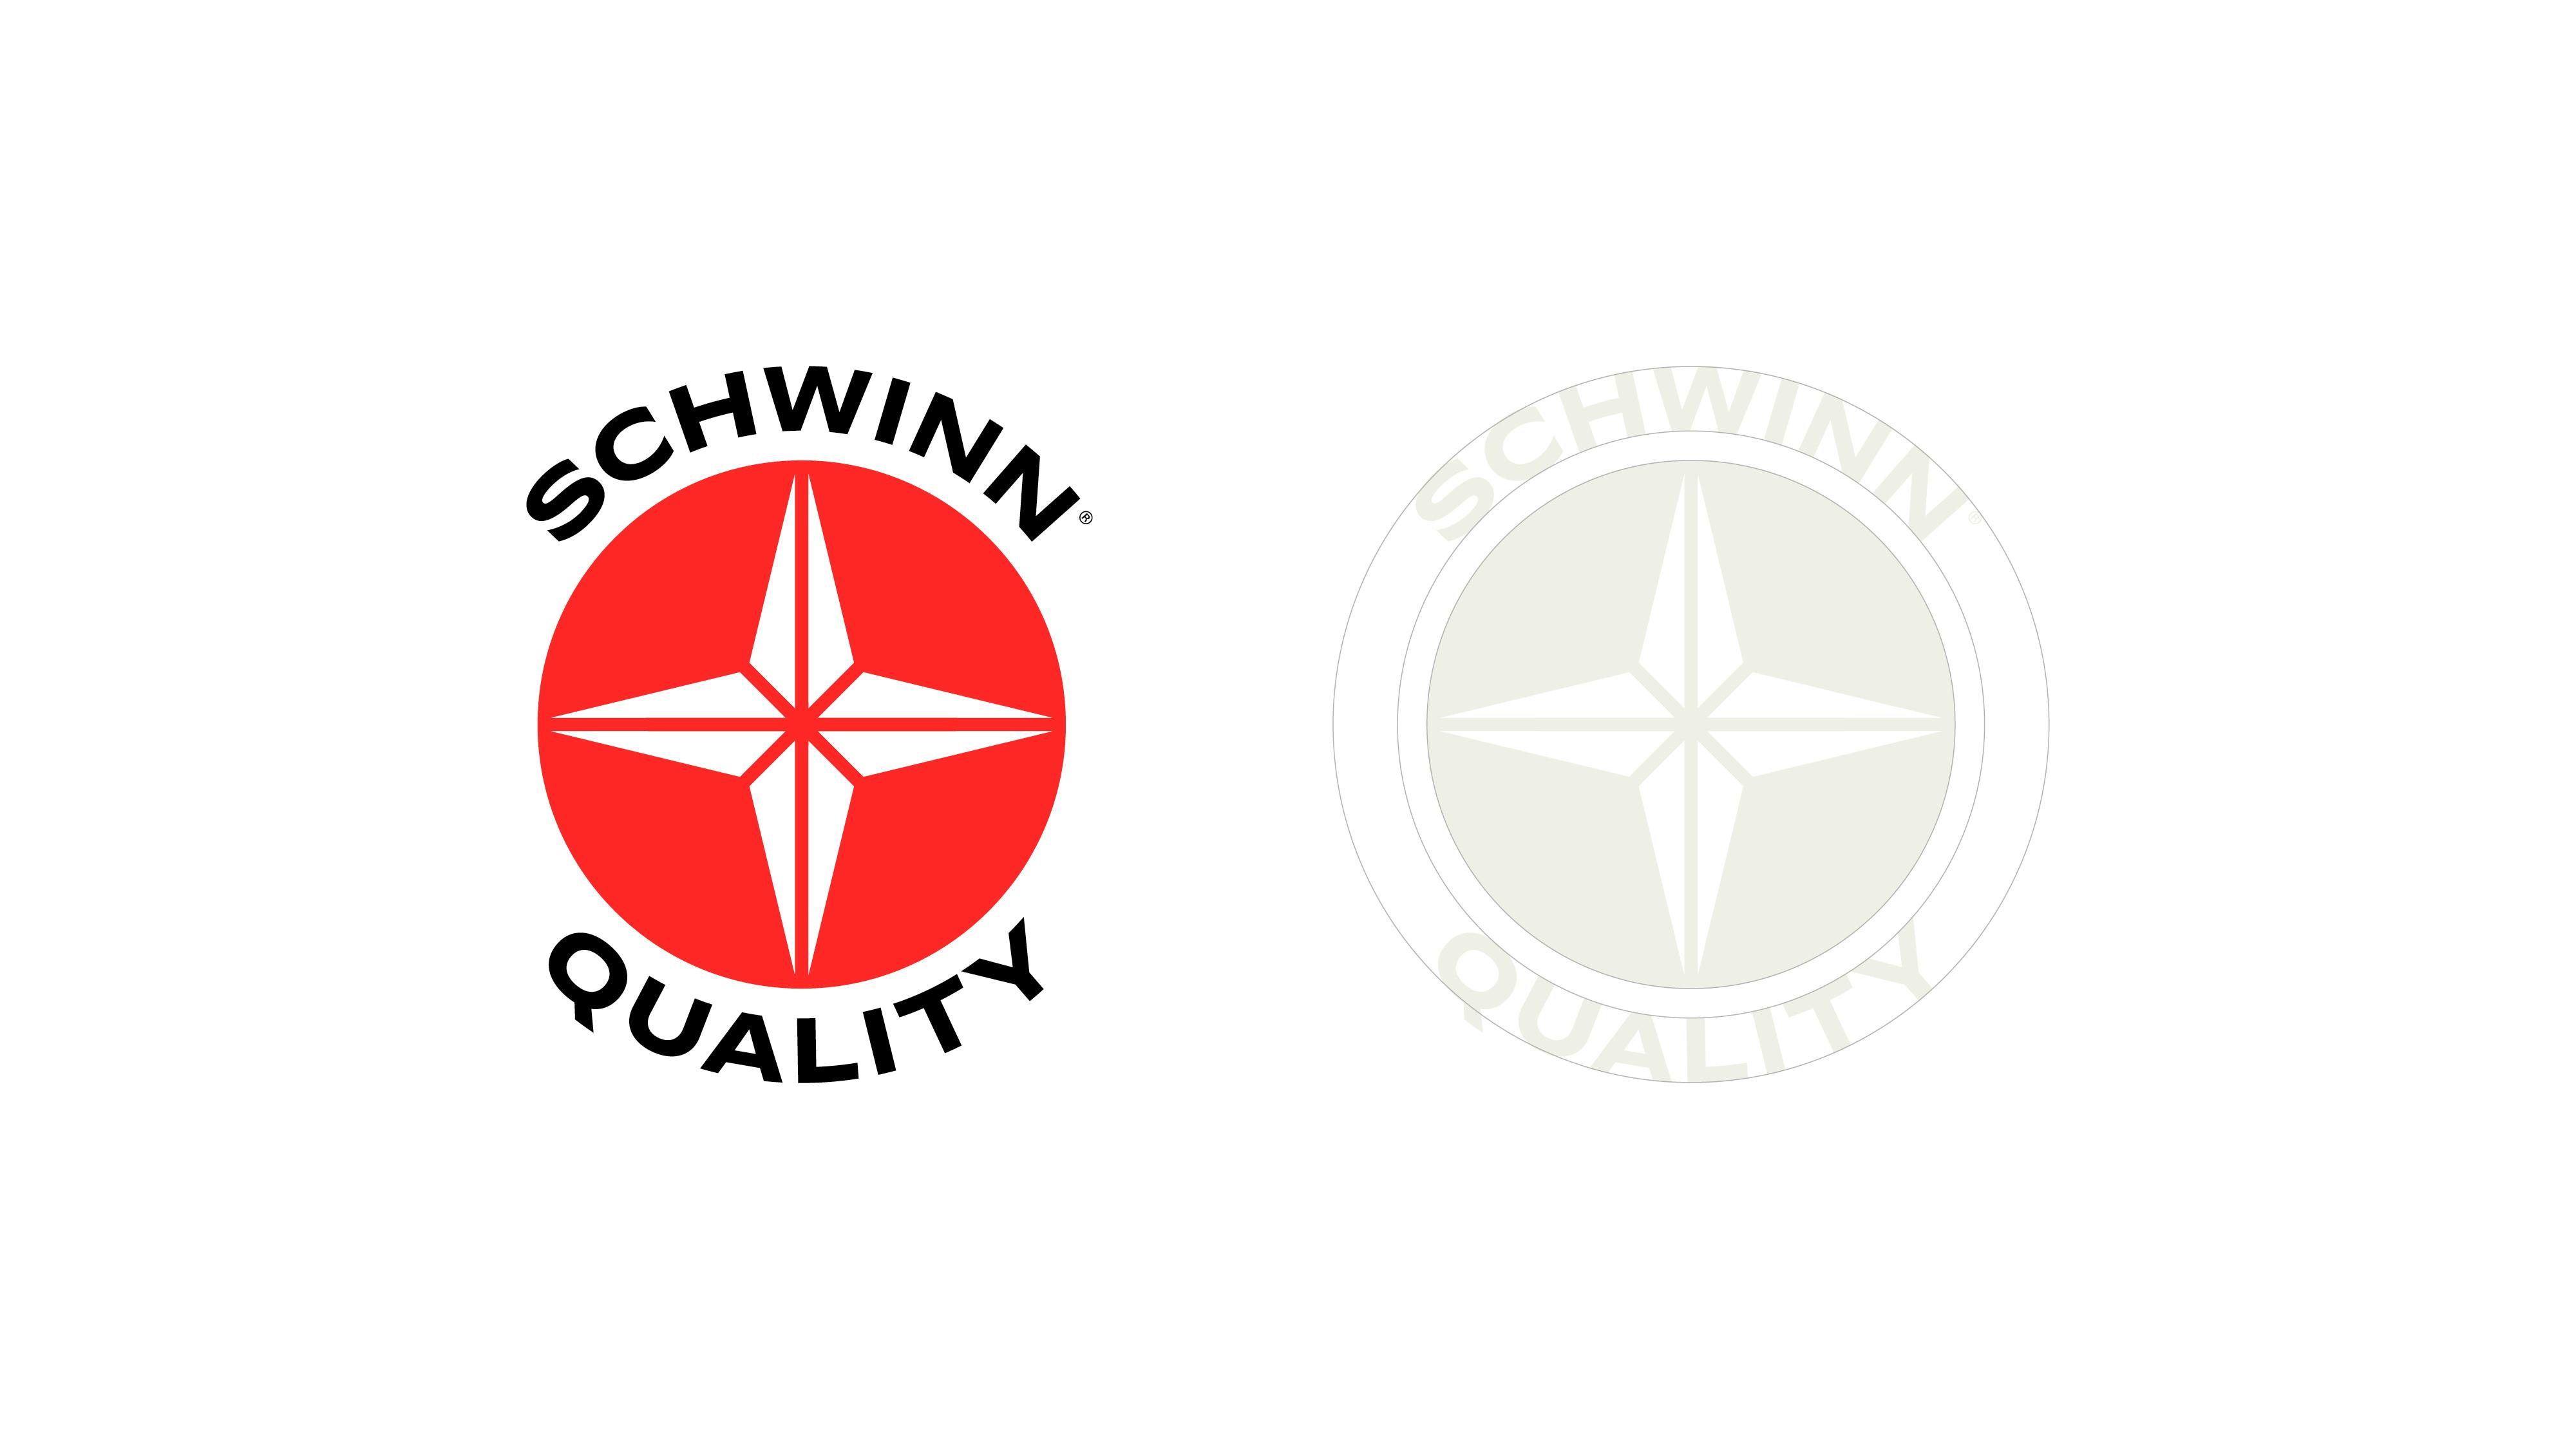 Schwinn quality star